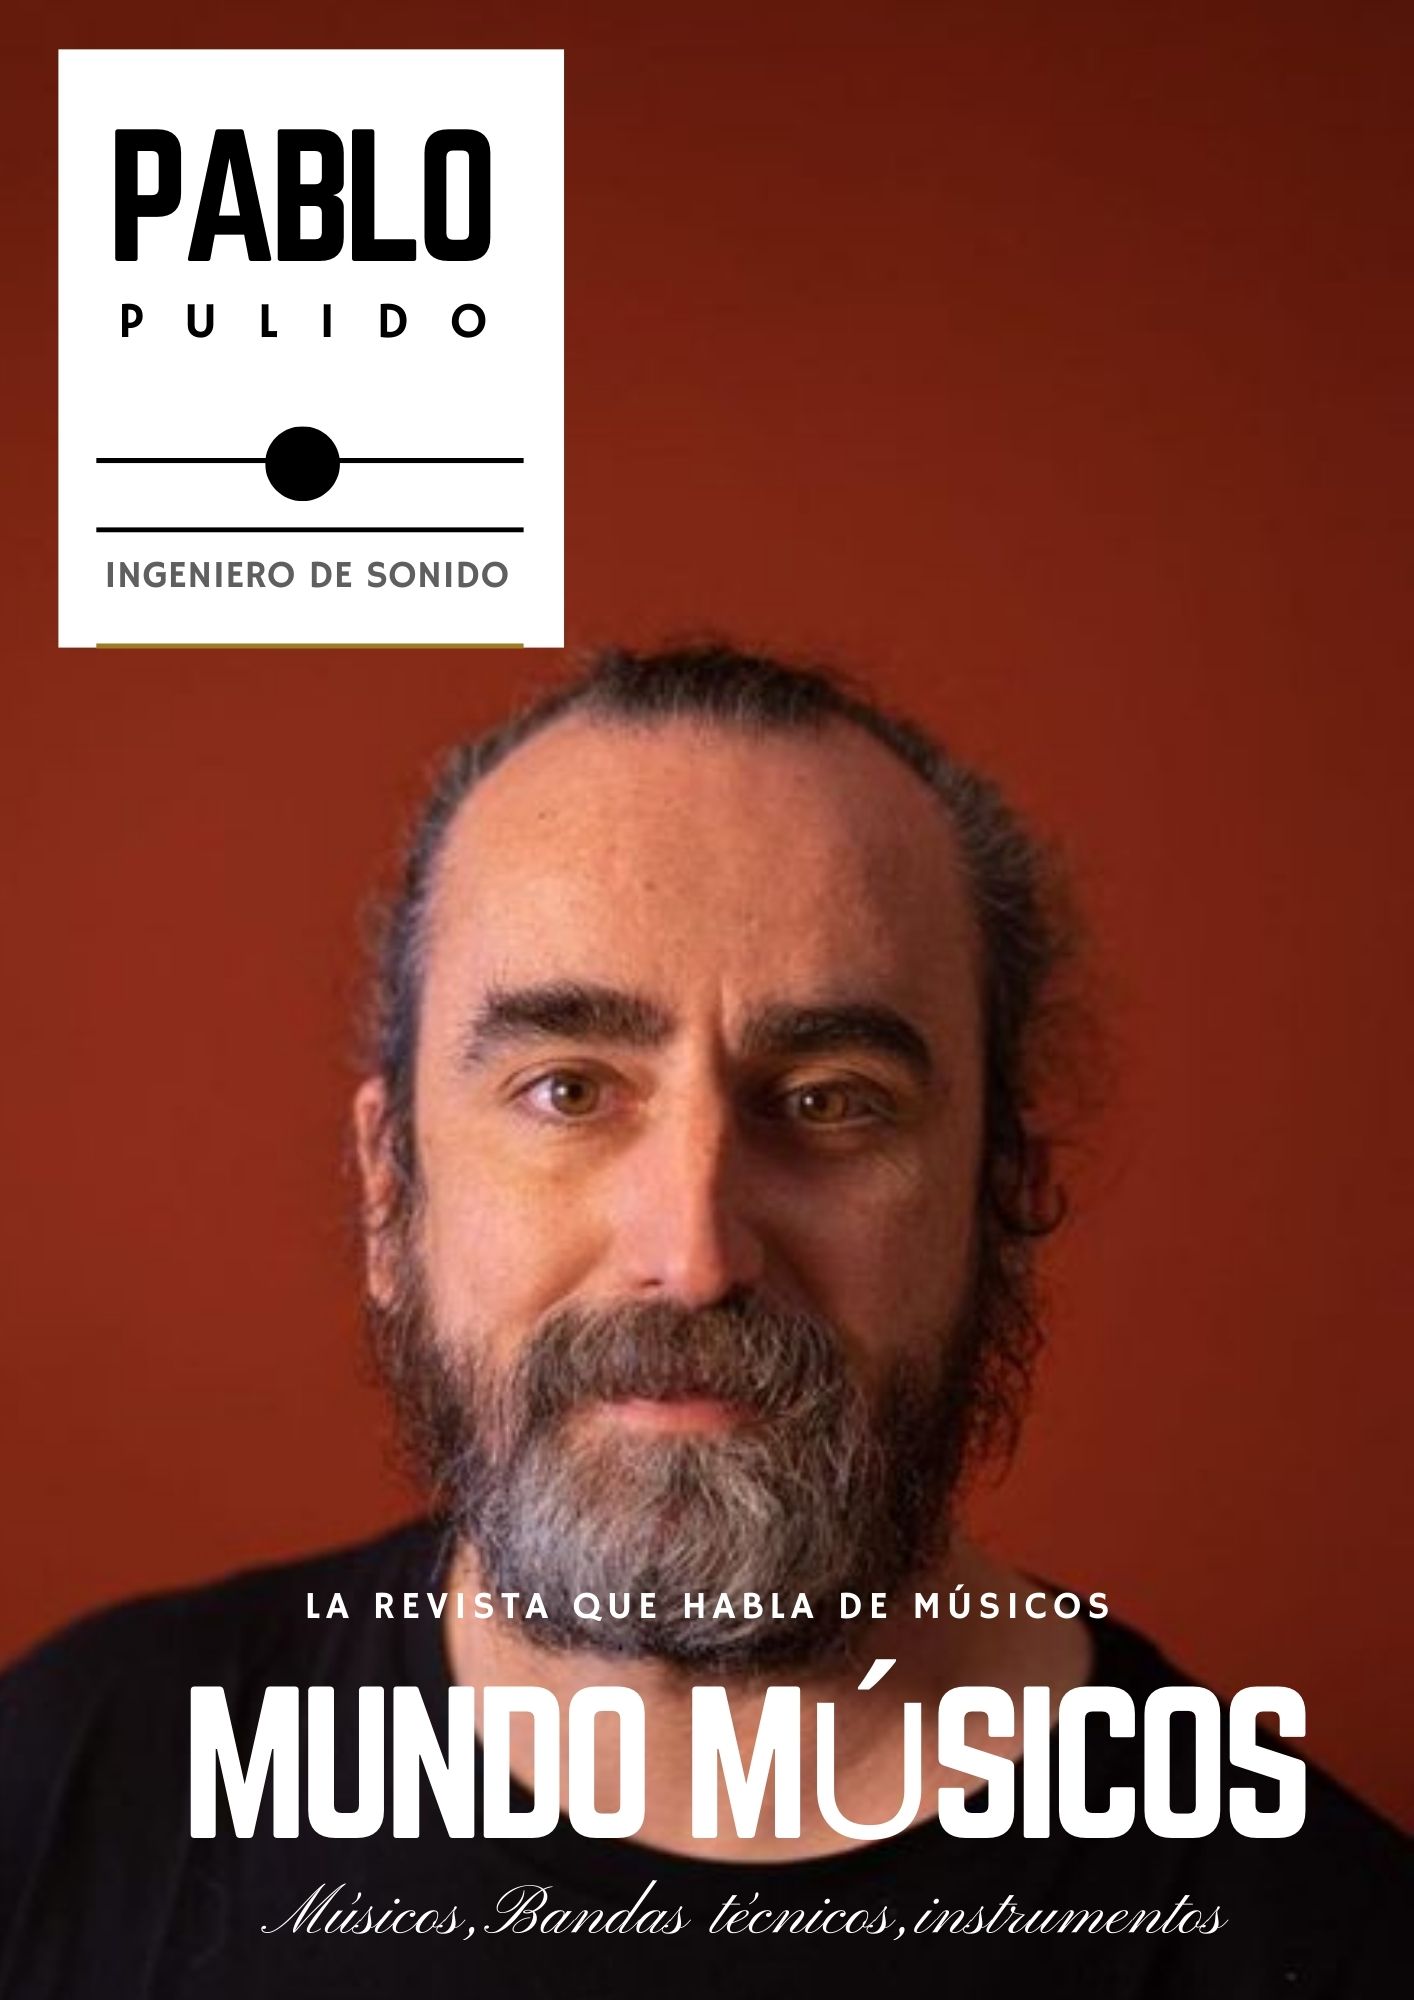 Pablo Pulido, Ingeniero de Sonido